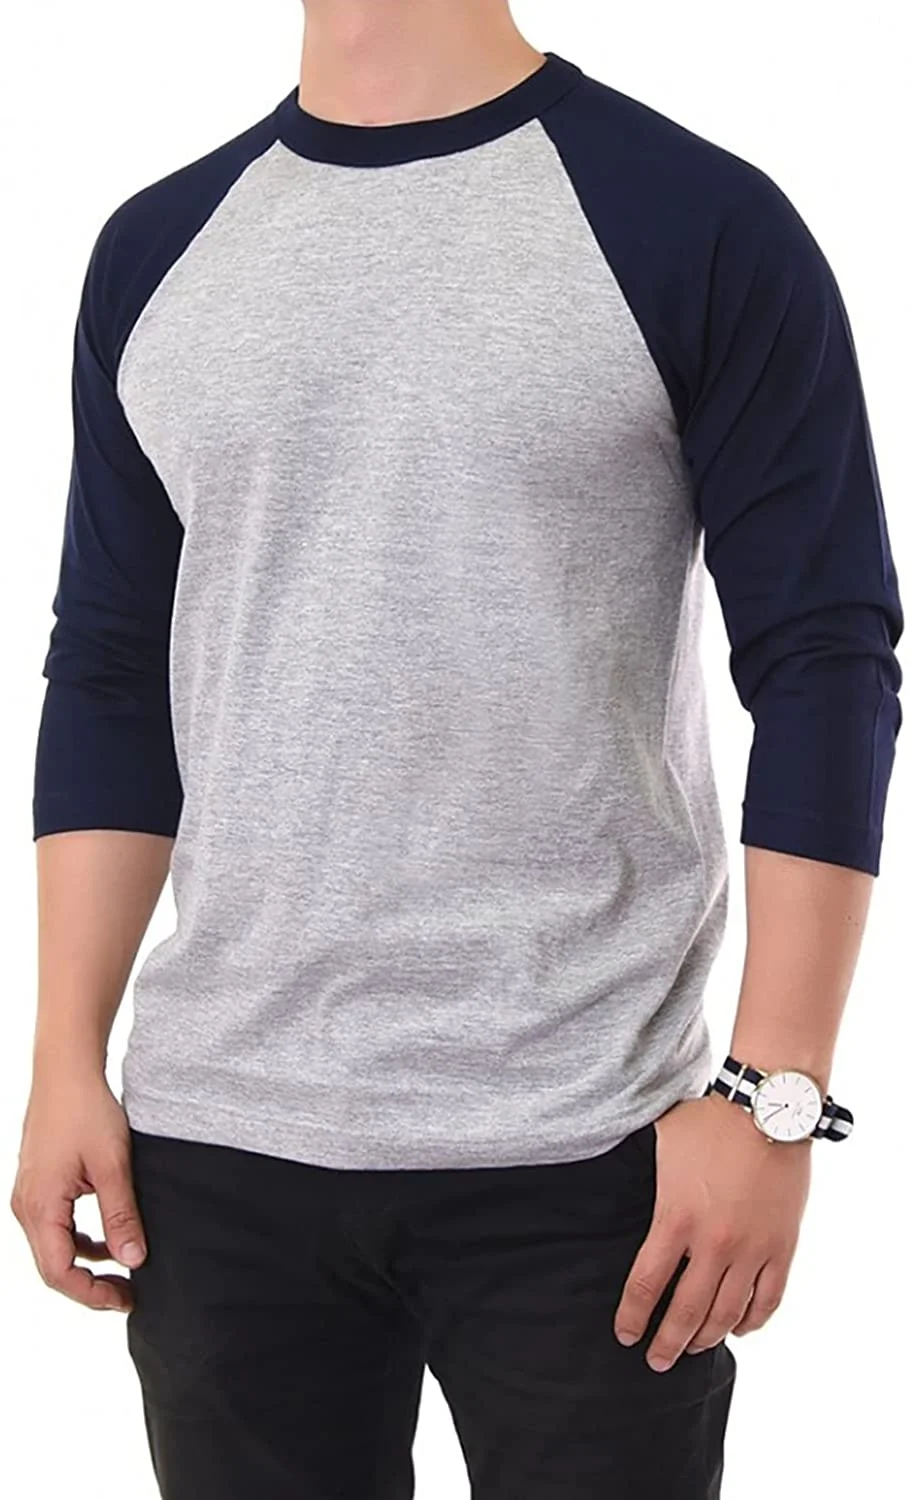 Wholesale Manufacturer Men’s Cotton 3 4 Length Sleeve Raglan Baseball T Shirt Made In Bangladesh